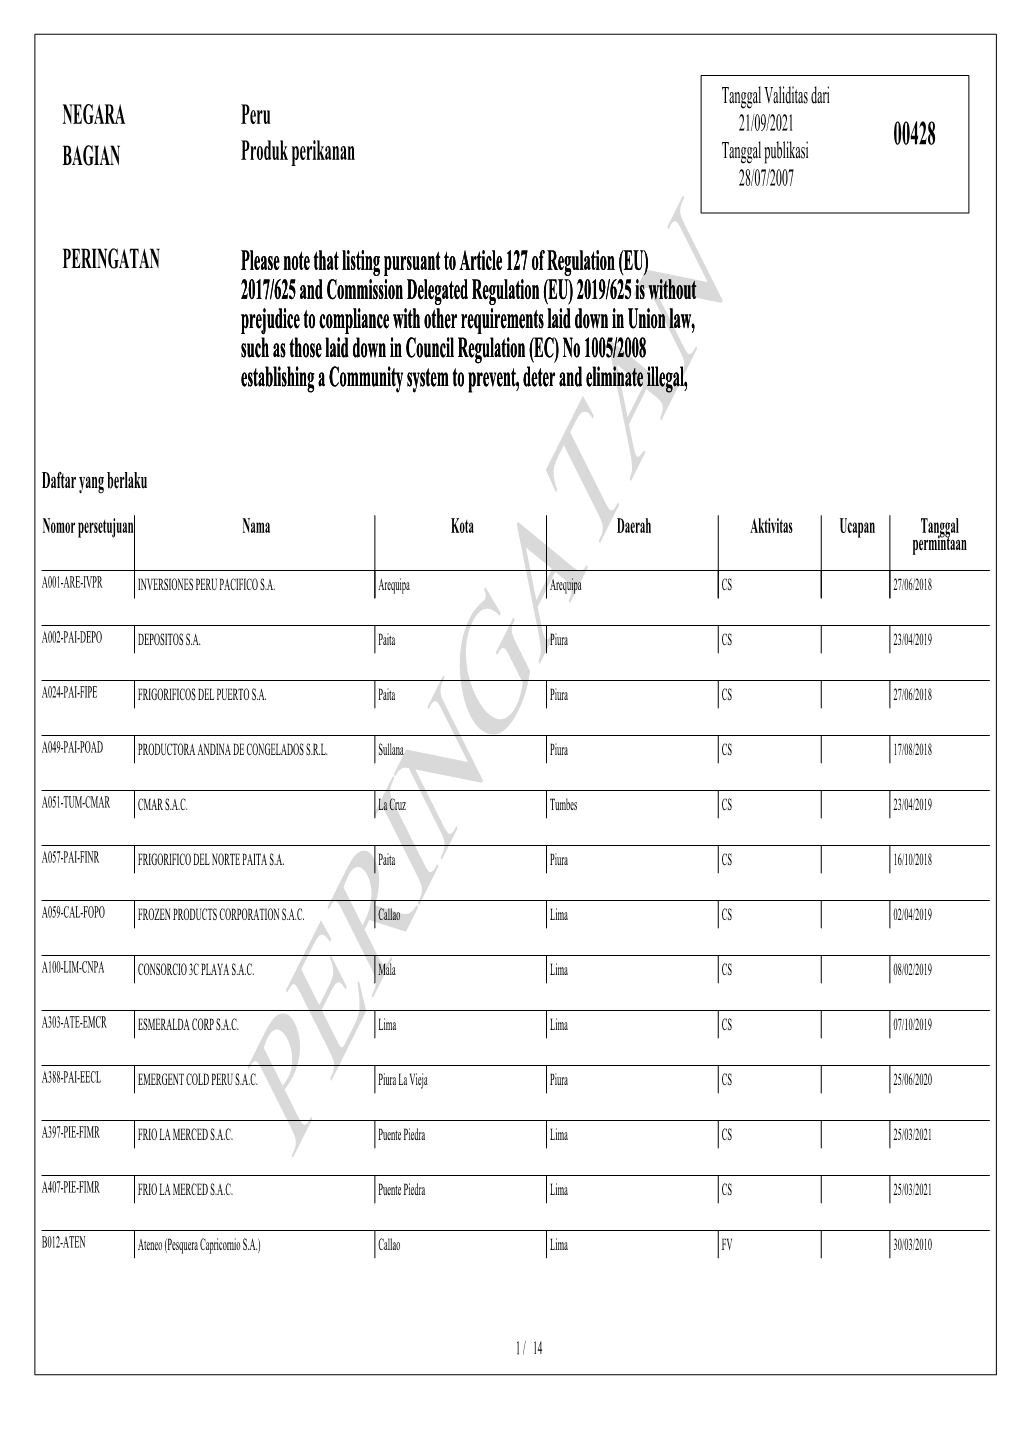 NEGARA BAGIAN Peru Produk Perikanan PERINGATAN Please Note That Listing Pursuant to Article 127 of Regulation (EU) 2017/625